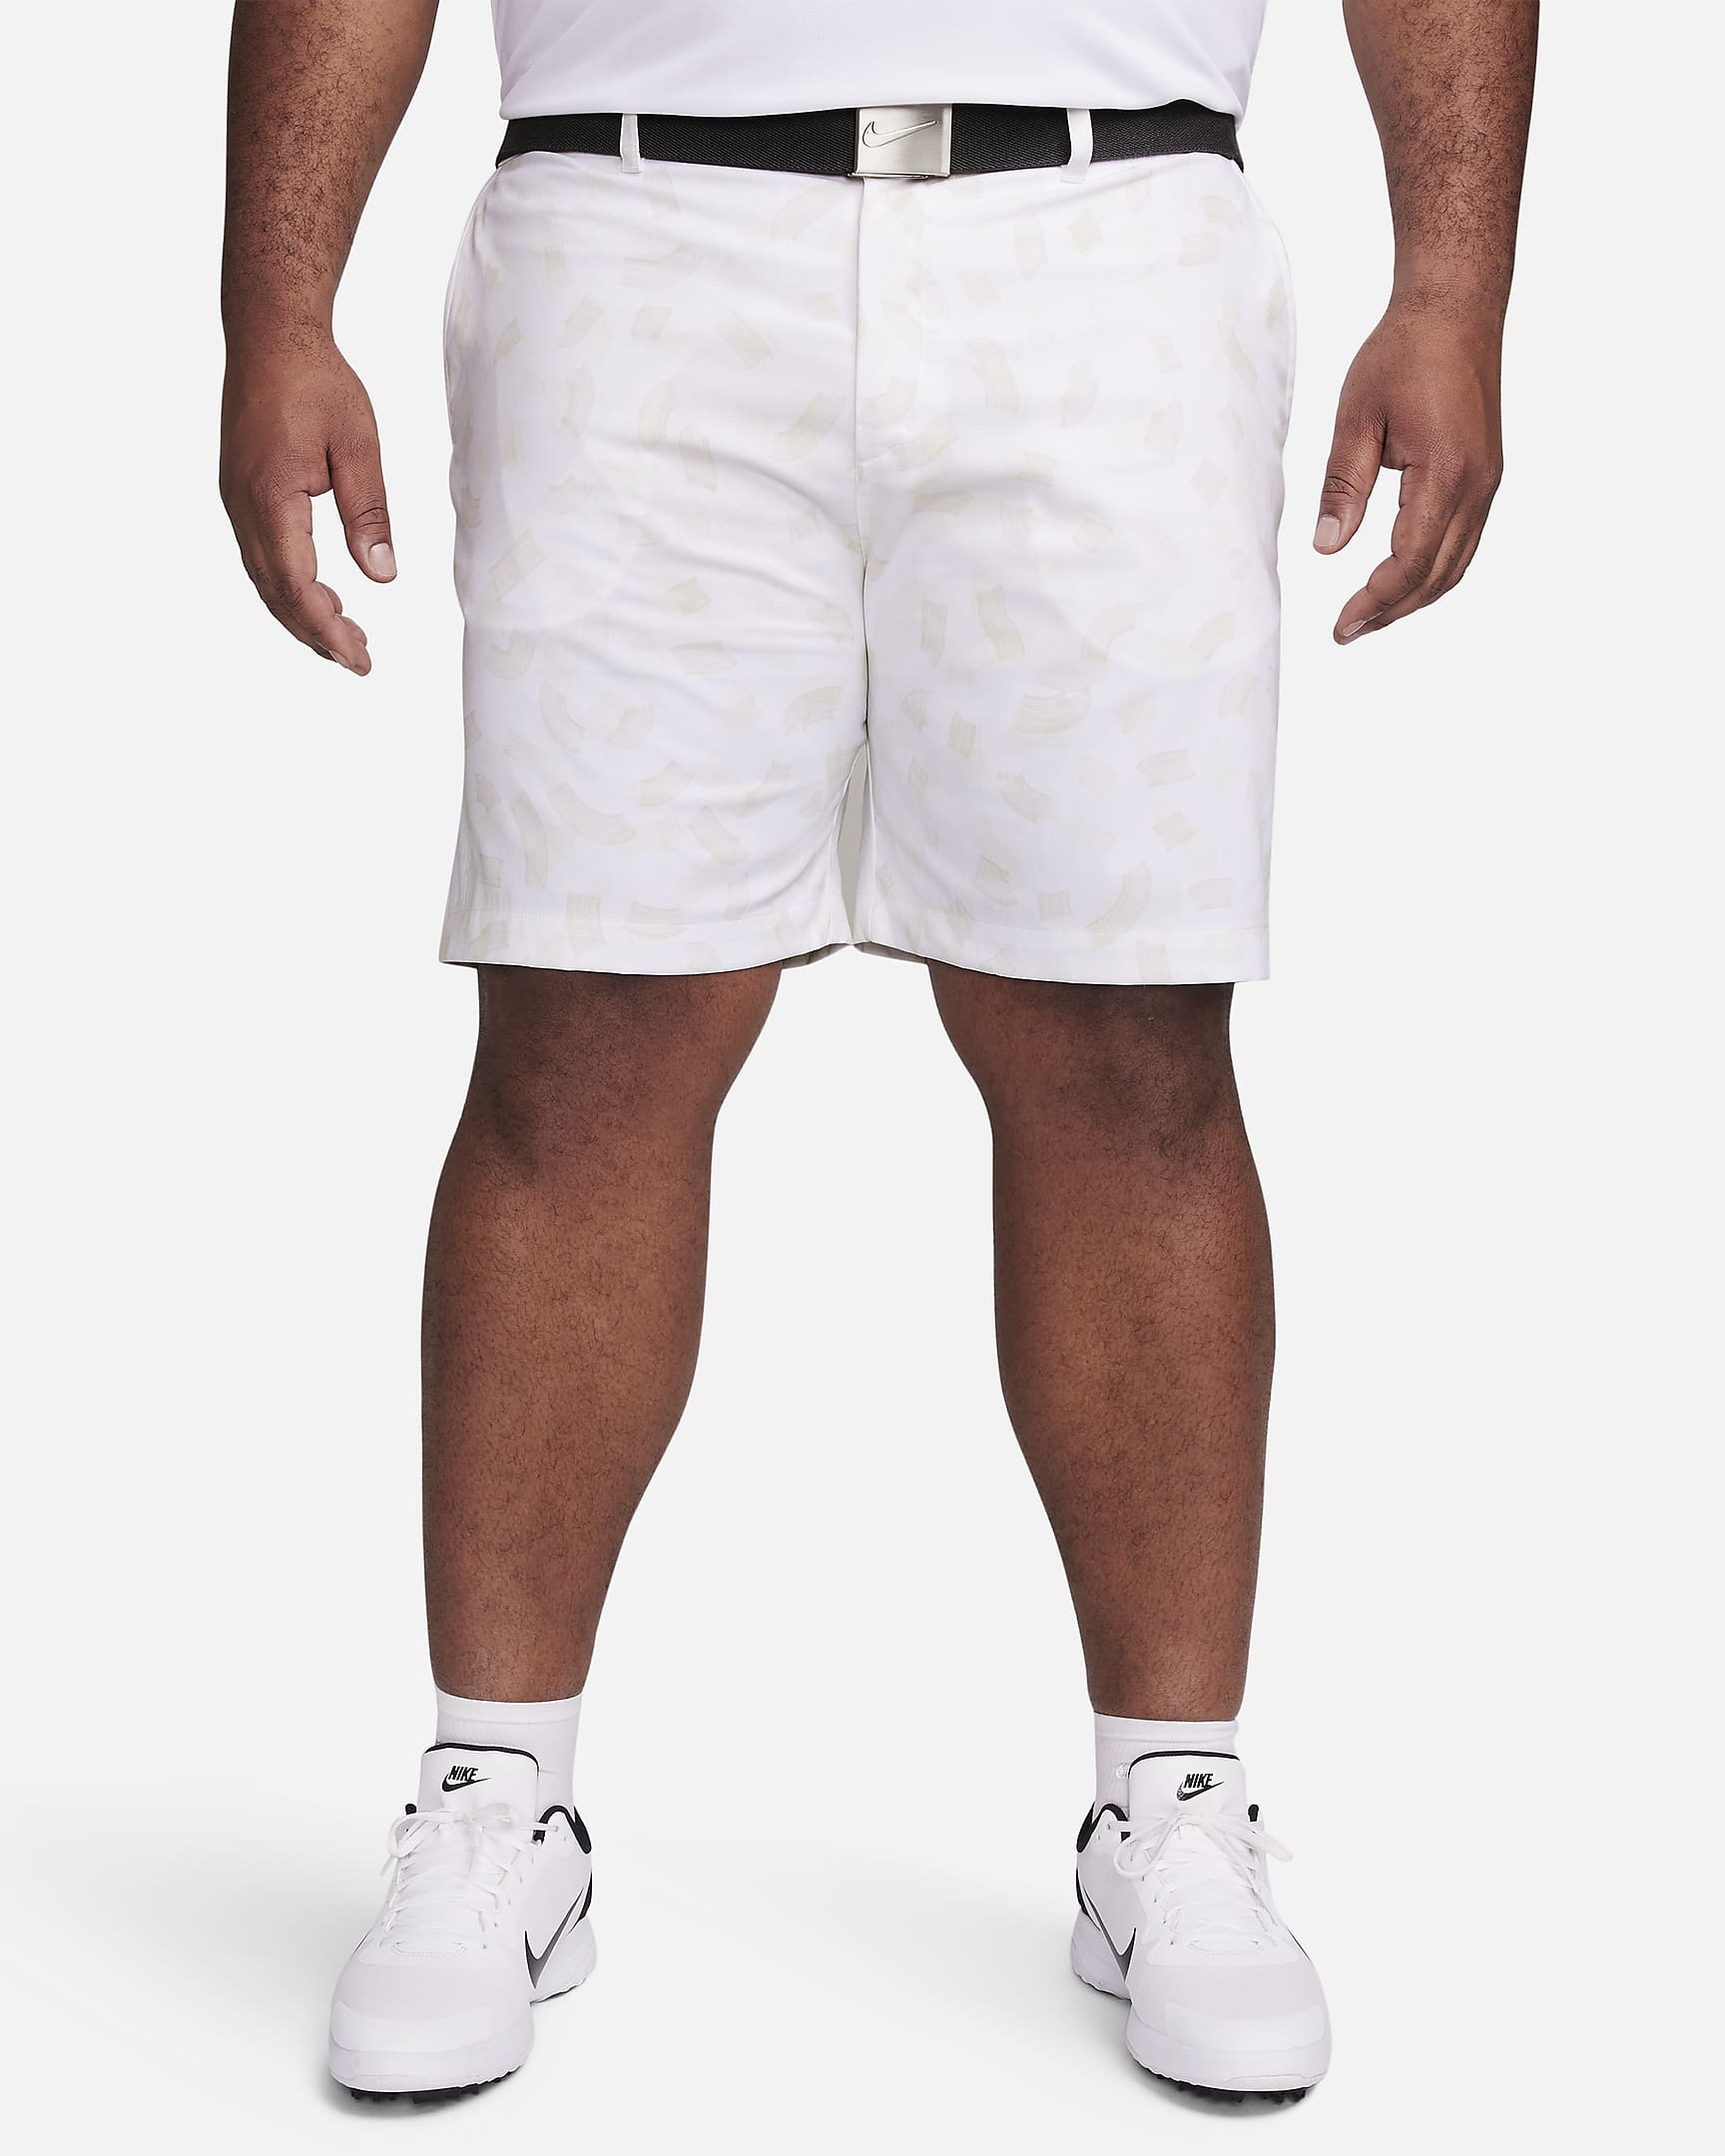 Nike Tour Men's 20cm (approx.) Chino Golf Shorts - White/Black